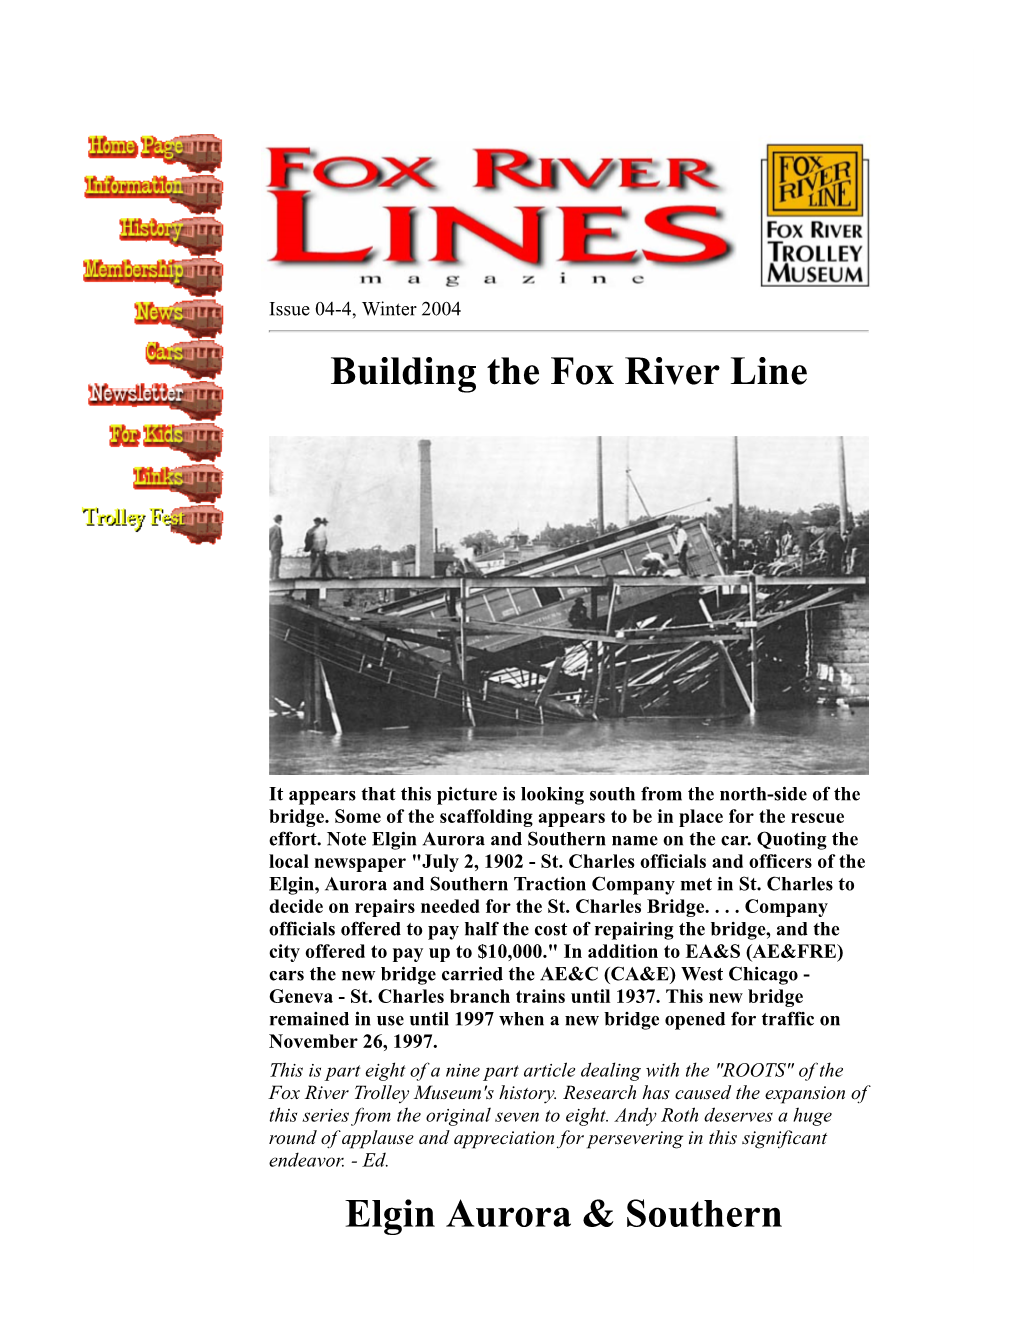 Building the Fox River Line Elgin Aurora & Southern